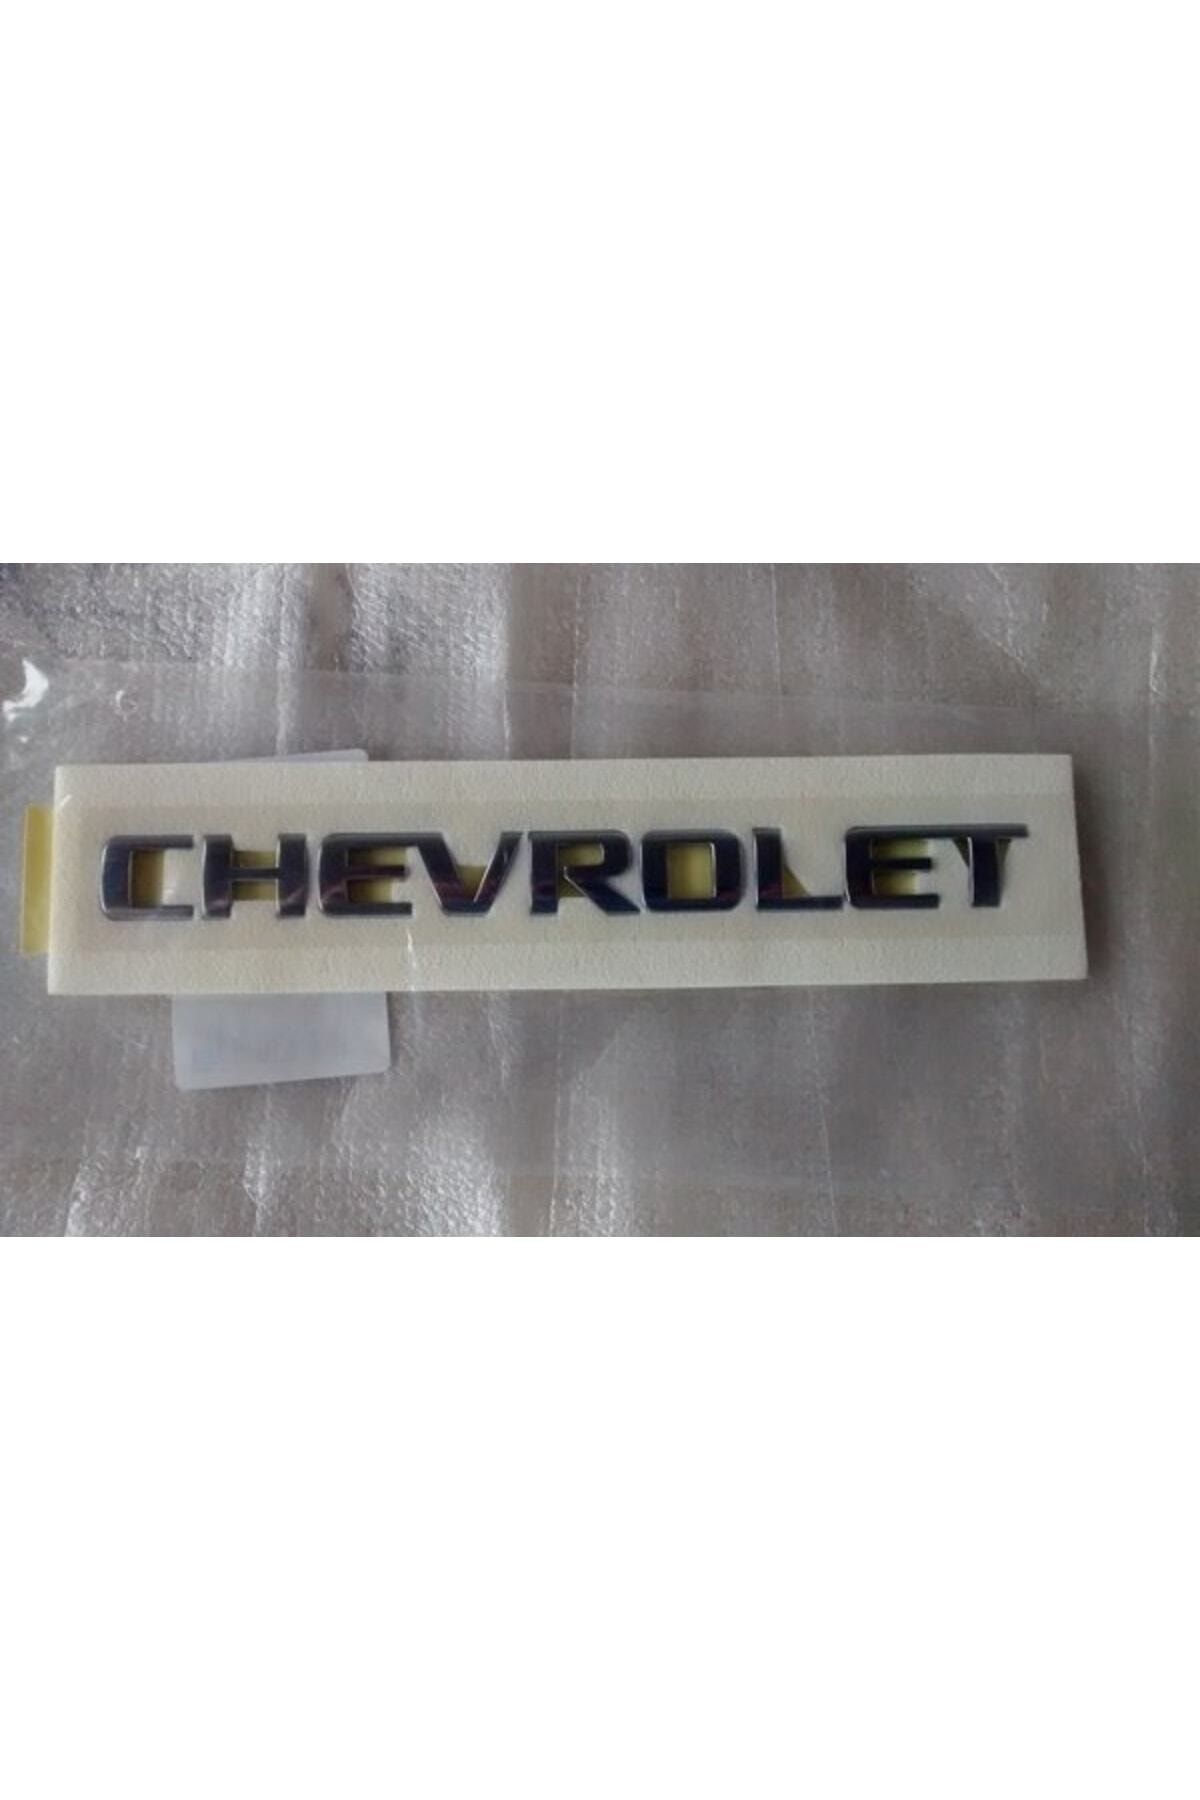 GM Chevrolet Kalos Yazısı Marka